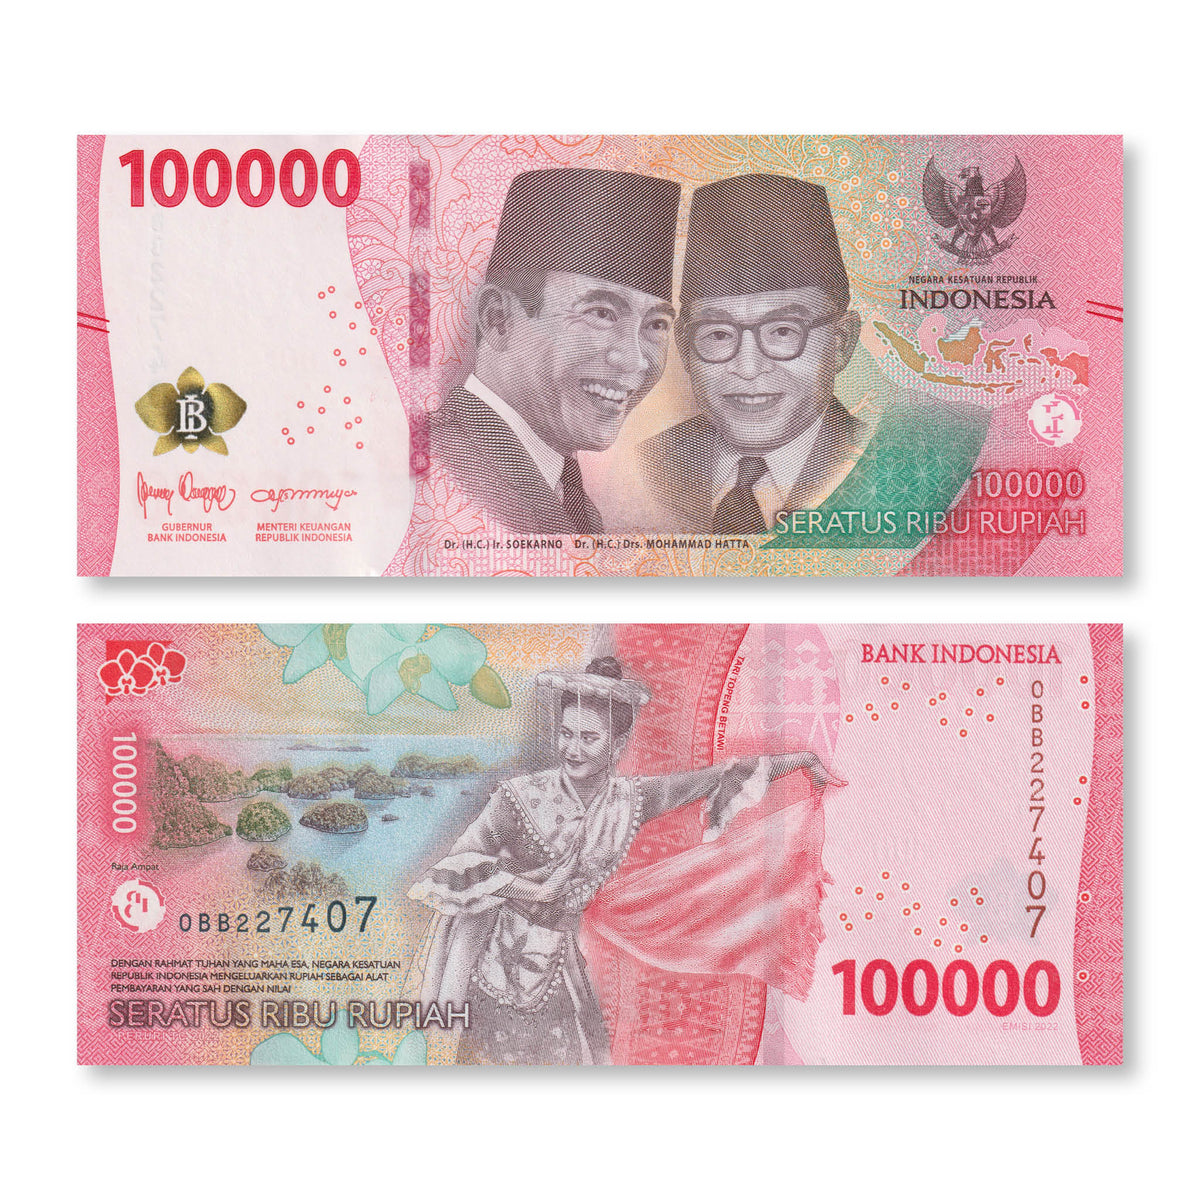 Indonesia 100000 Rupiah, 2022, B623a, UNC - Robert's World Money - World Banknotes